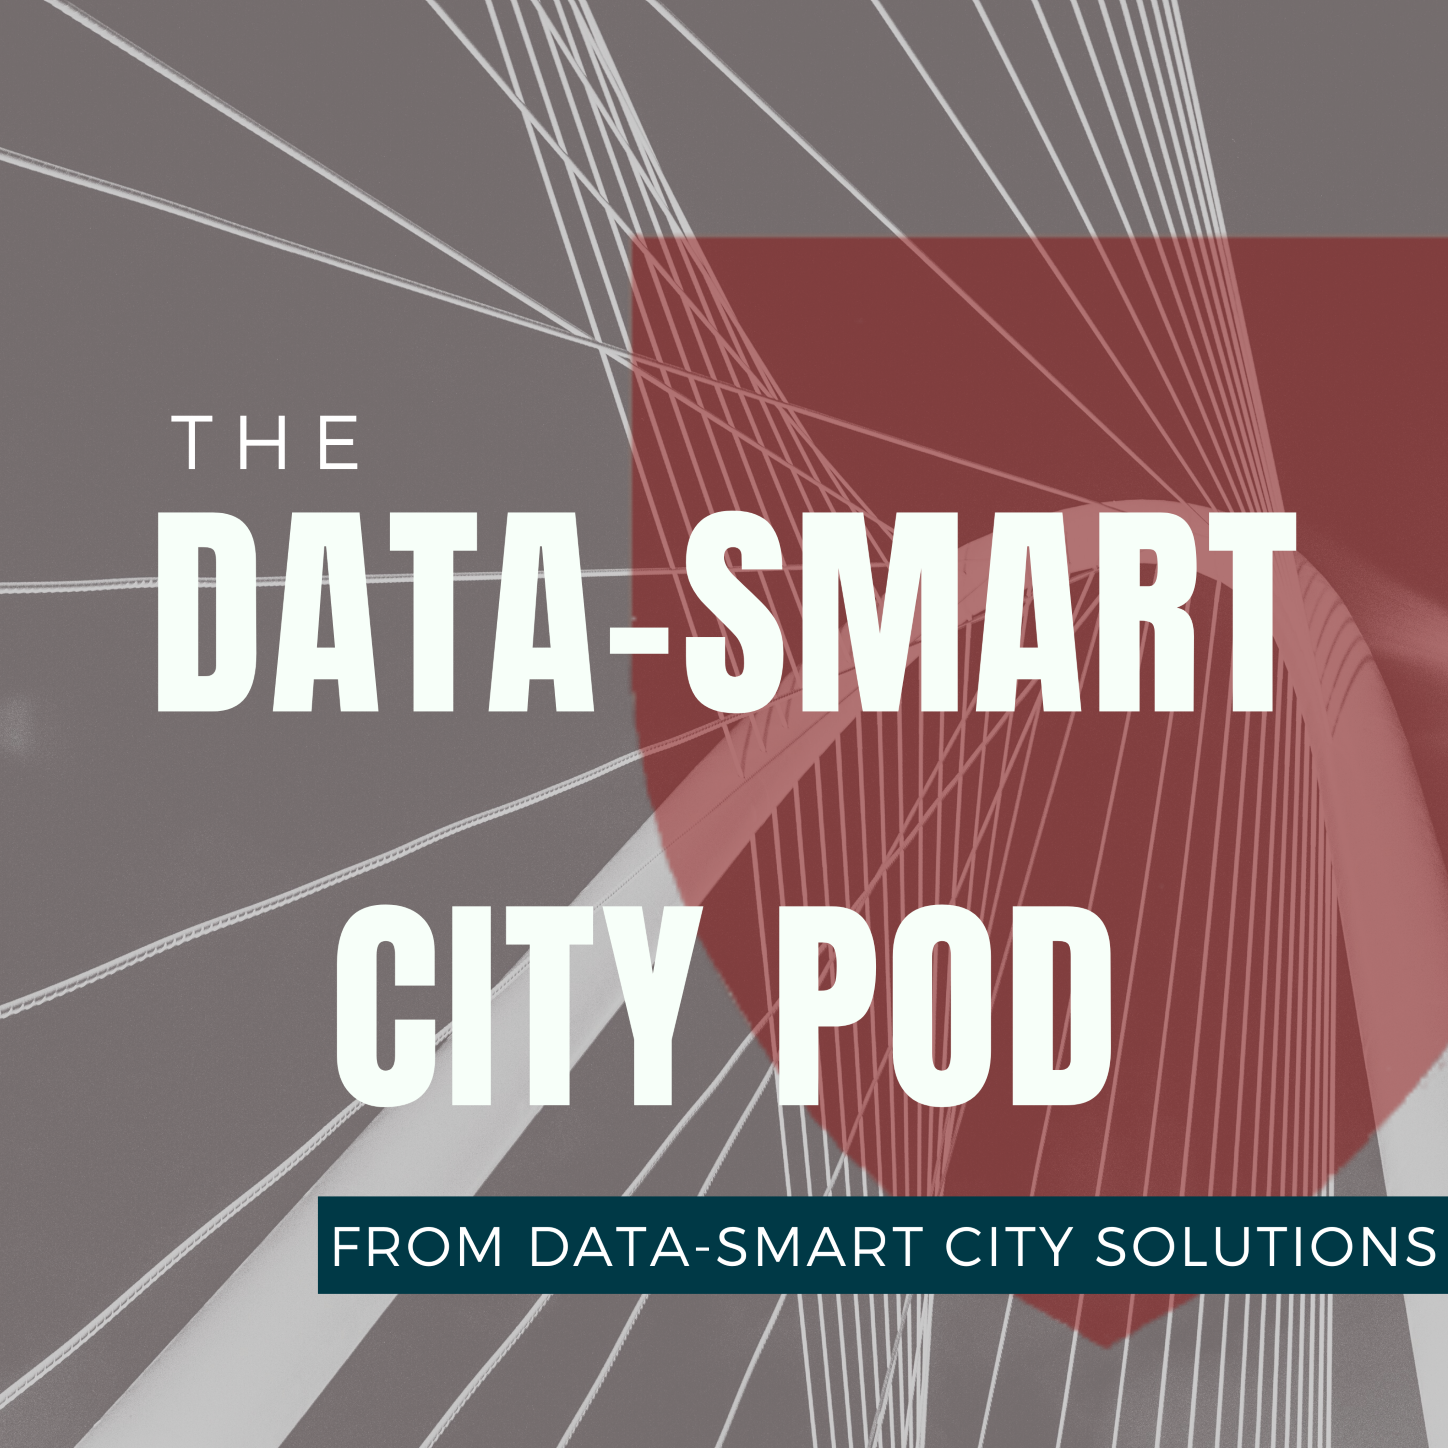 Data-Smart City Pod podcast cover image